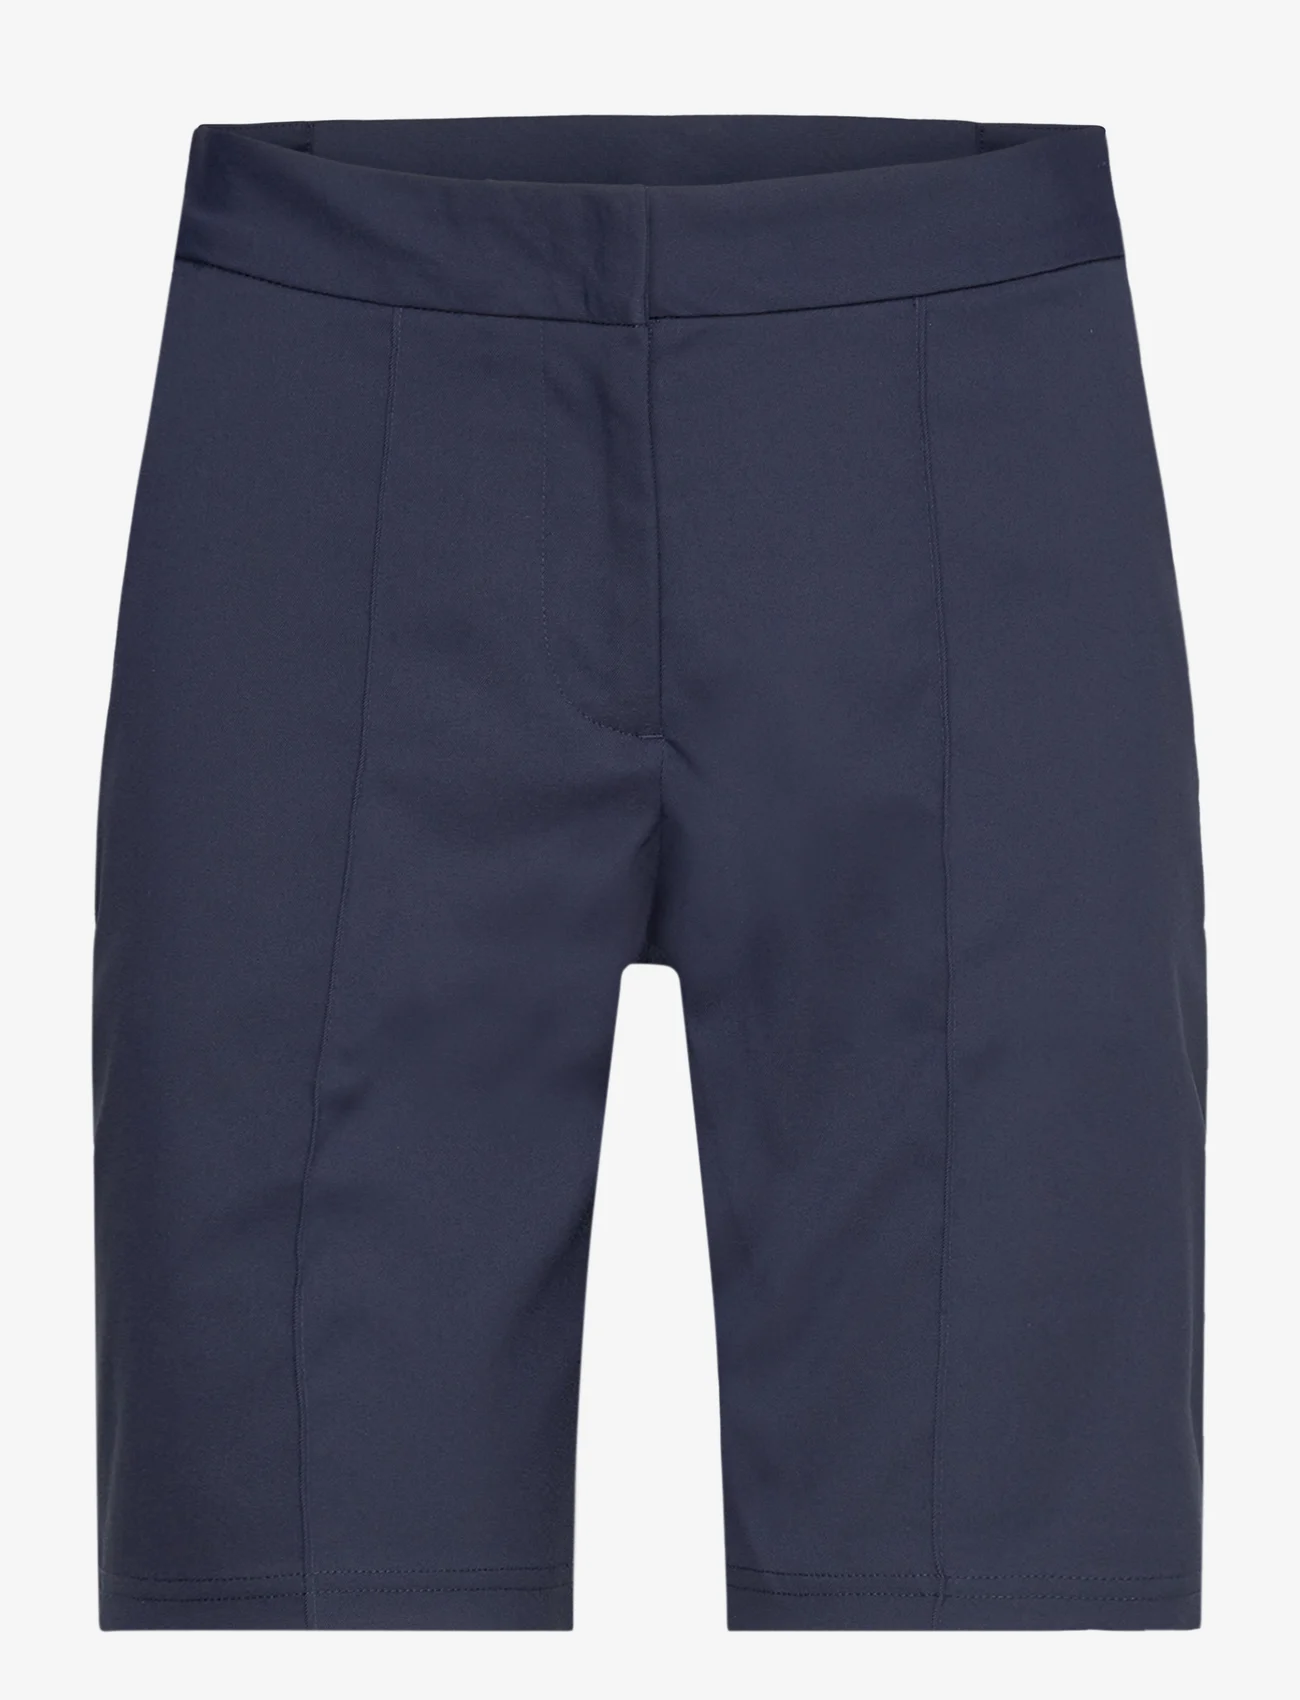 PUMA Golf - W Costa Short 8.5" - sports shorts - deep navy - 0